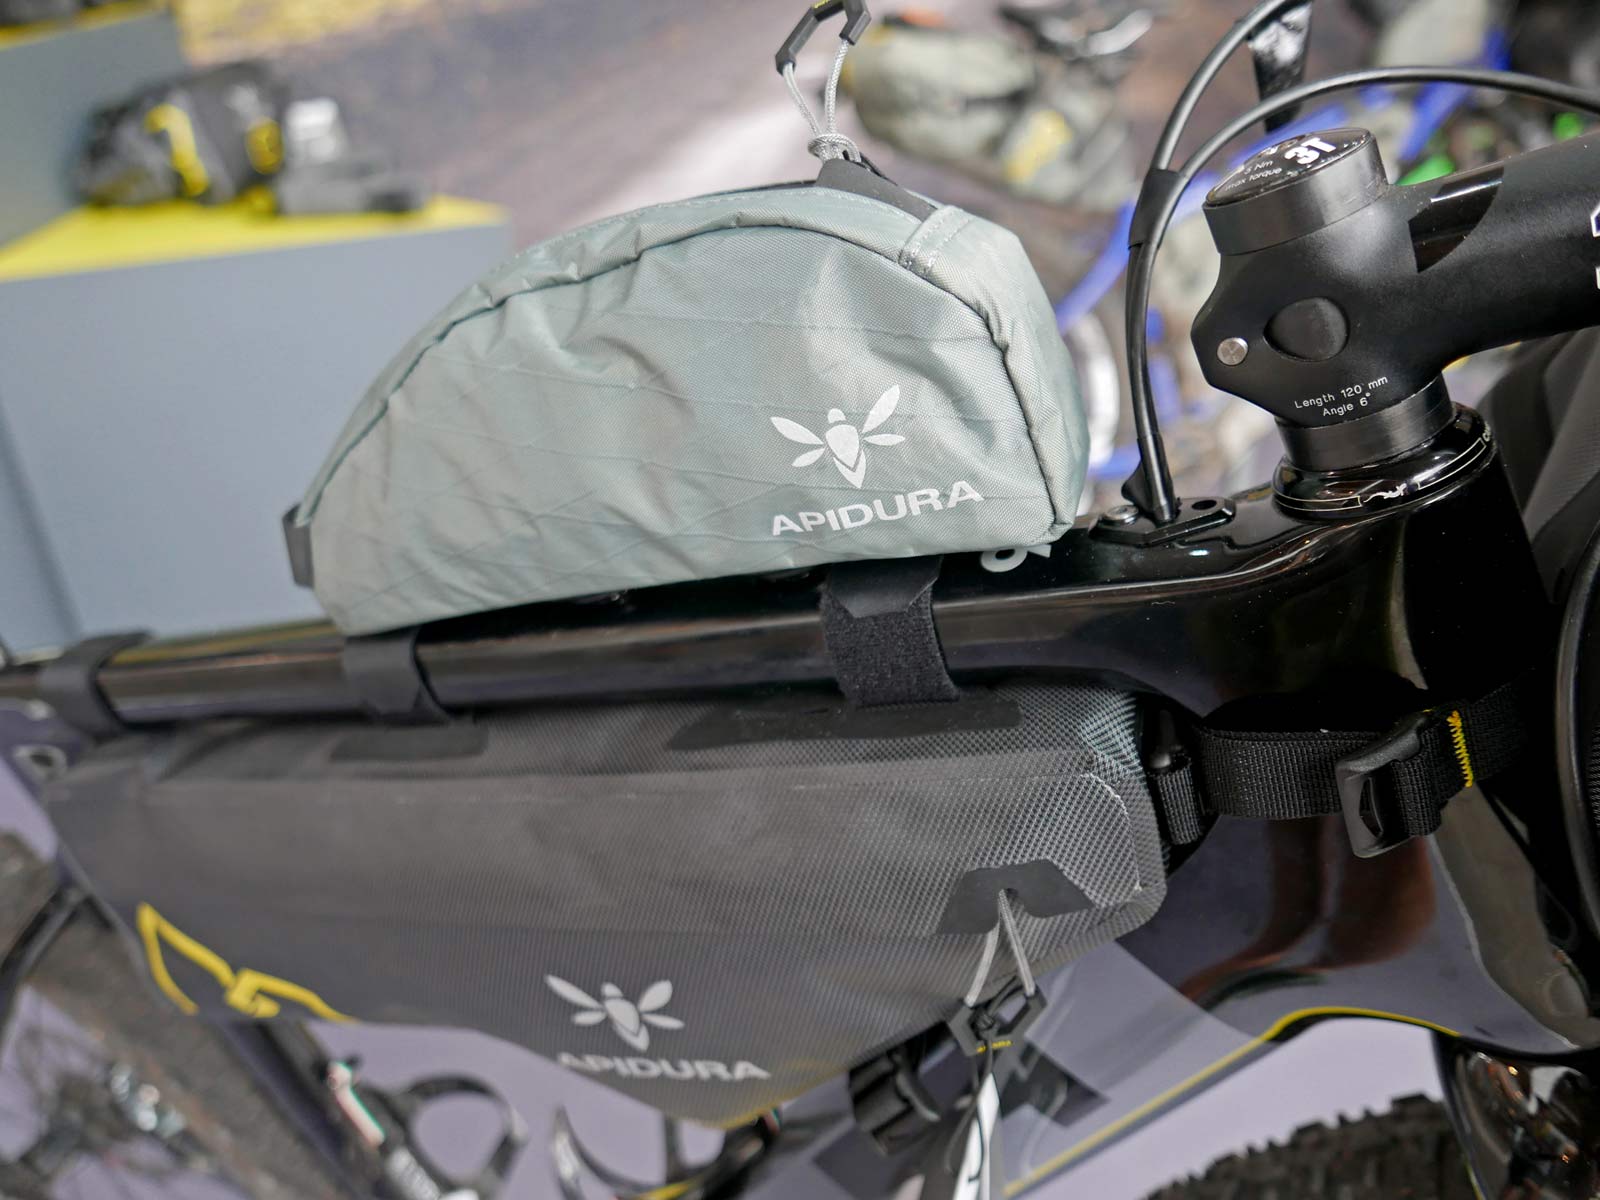 EB17: Apidura fills out waterproof bikepacking bags, teases prototype